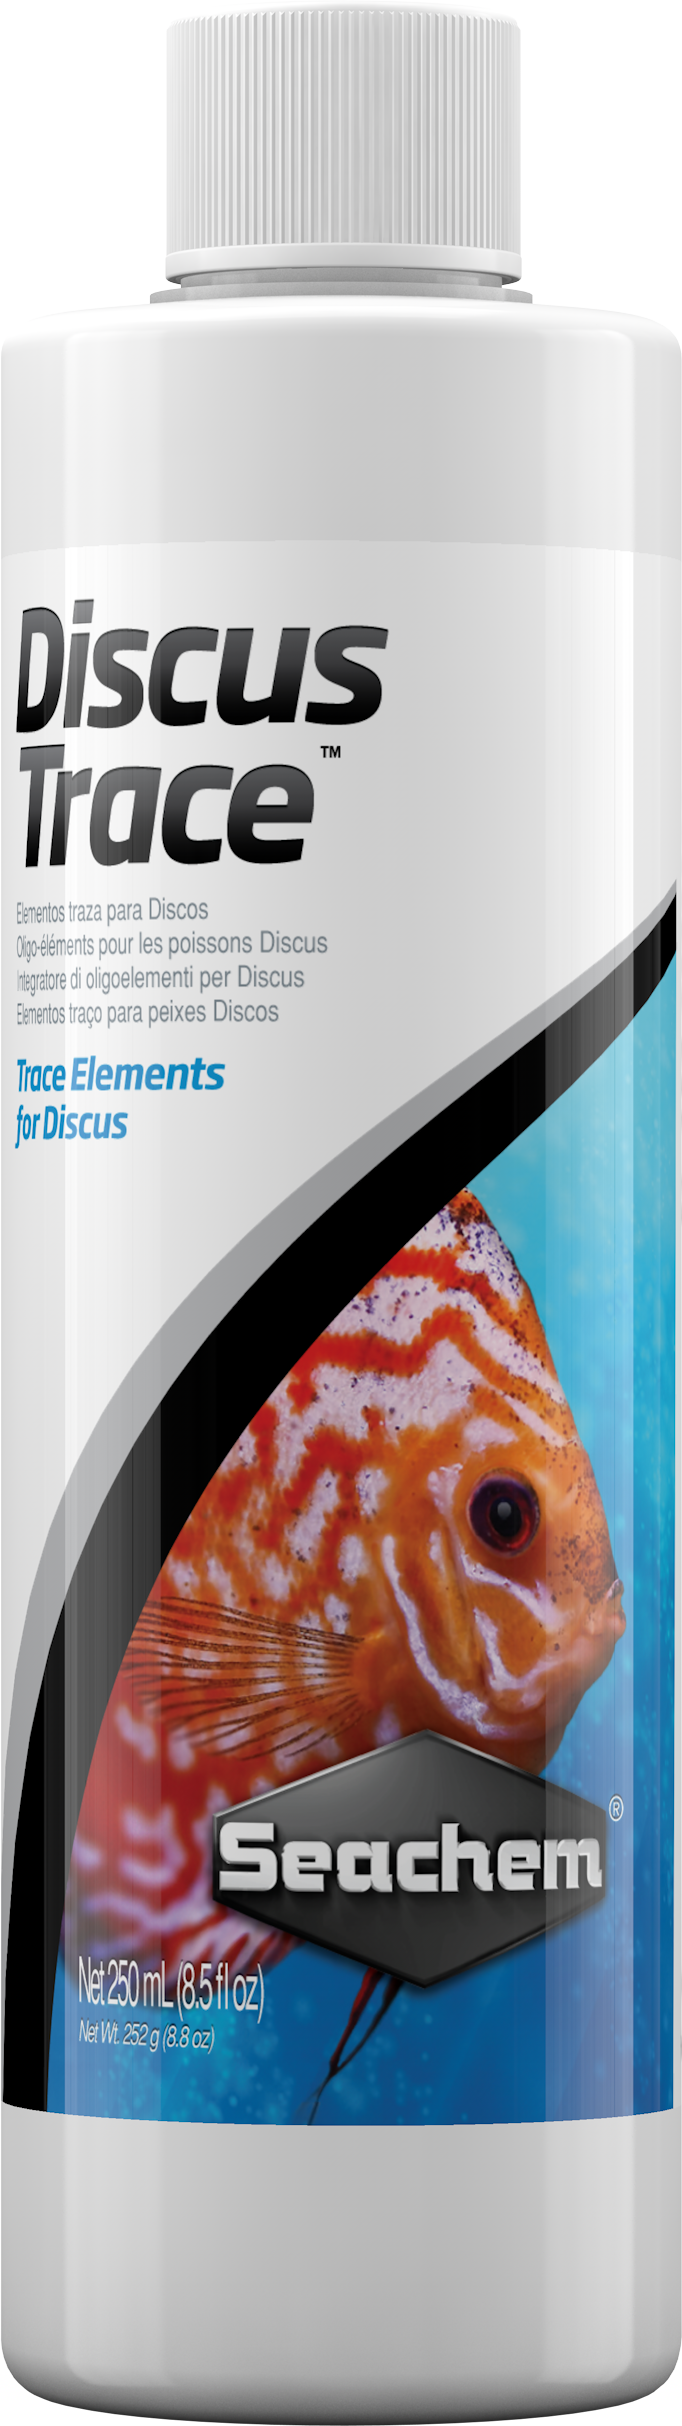 Seachem Discus Trace (250 mL)